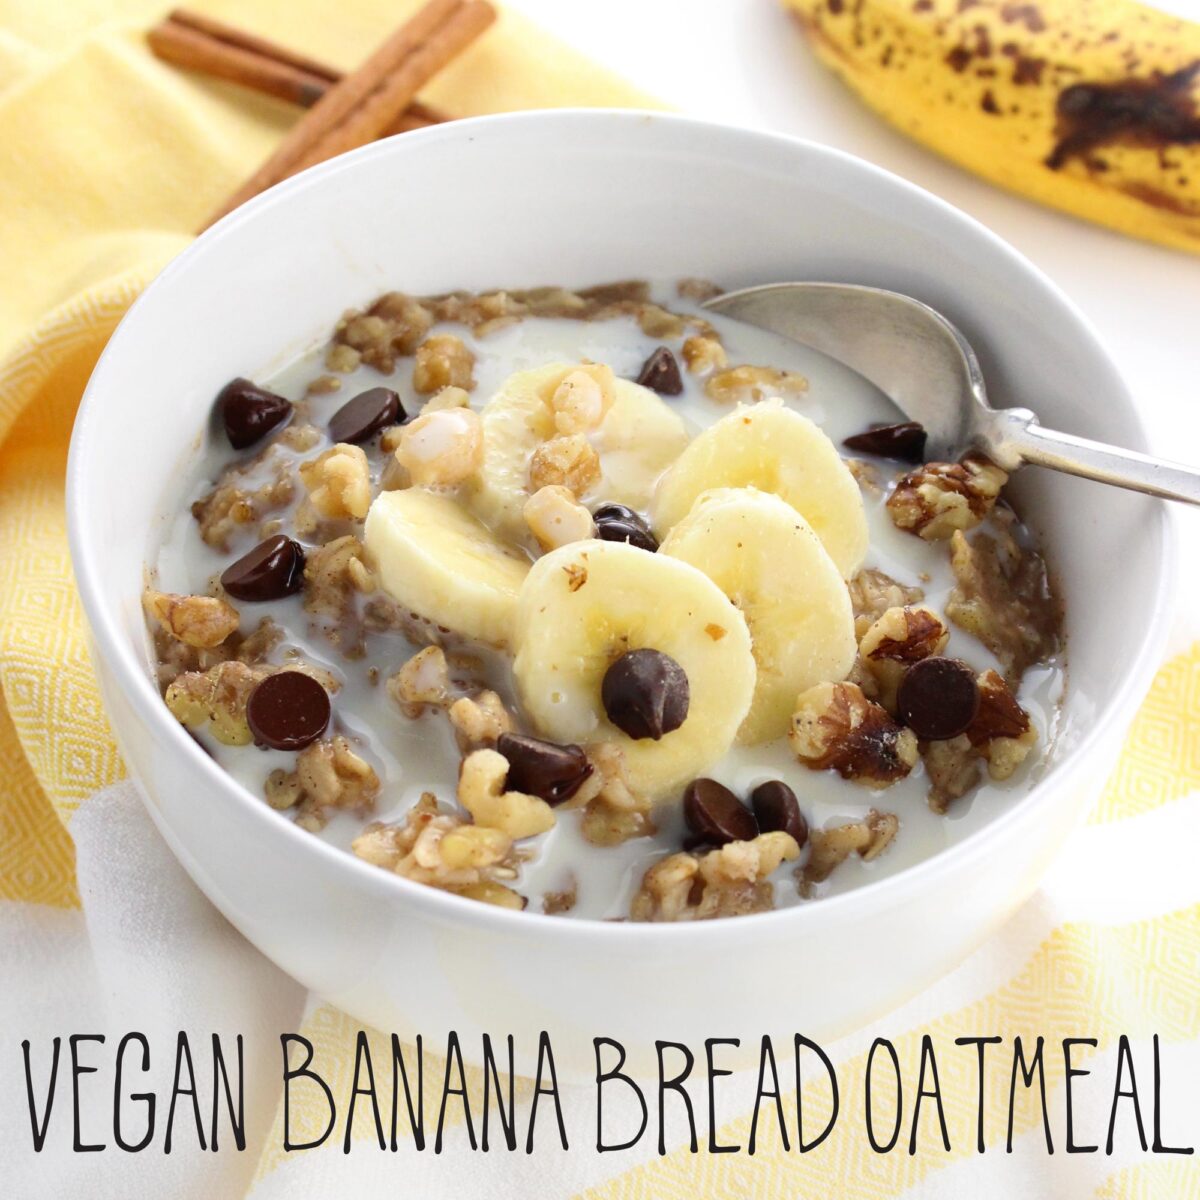 banana bread oatmeal recipe - vegan